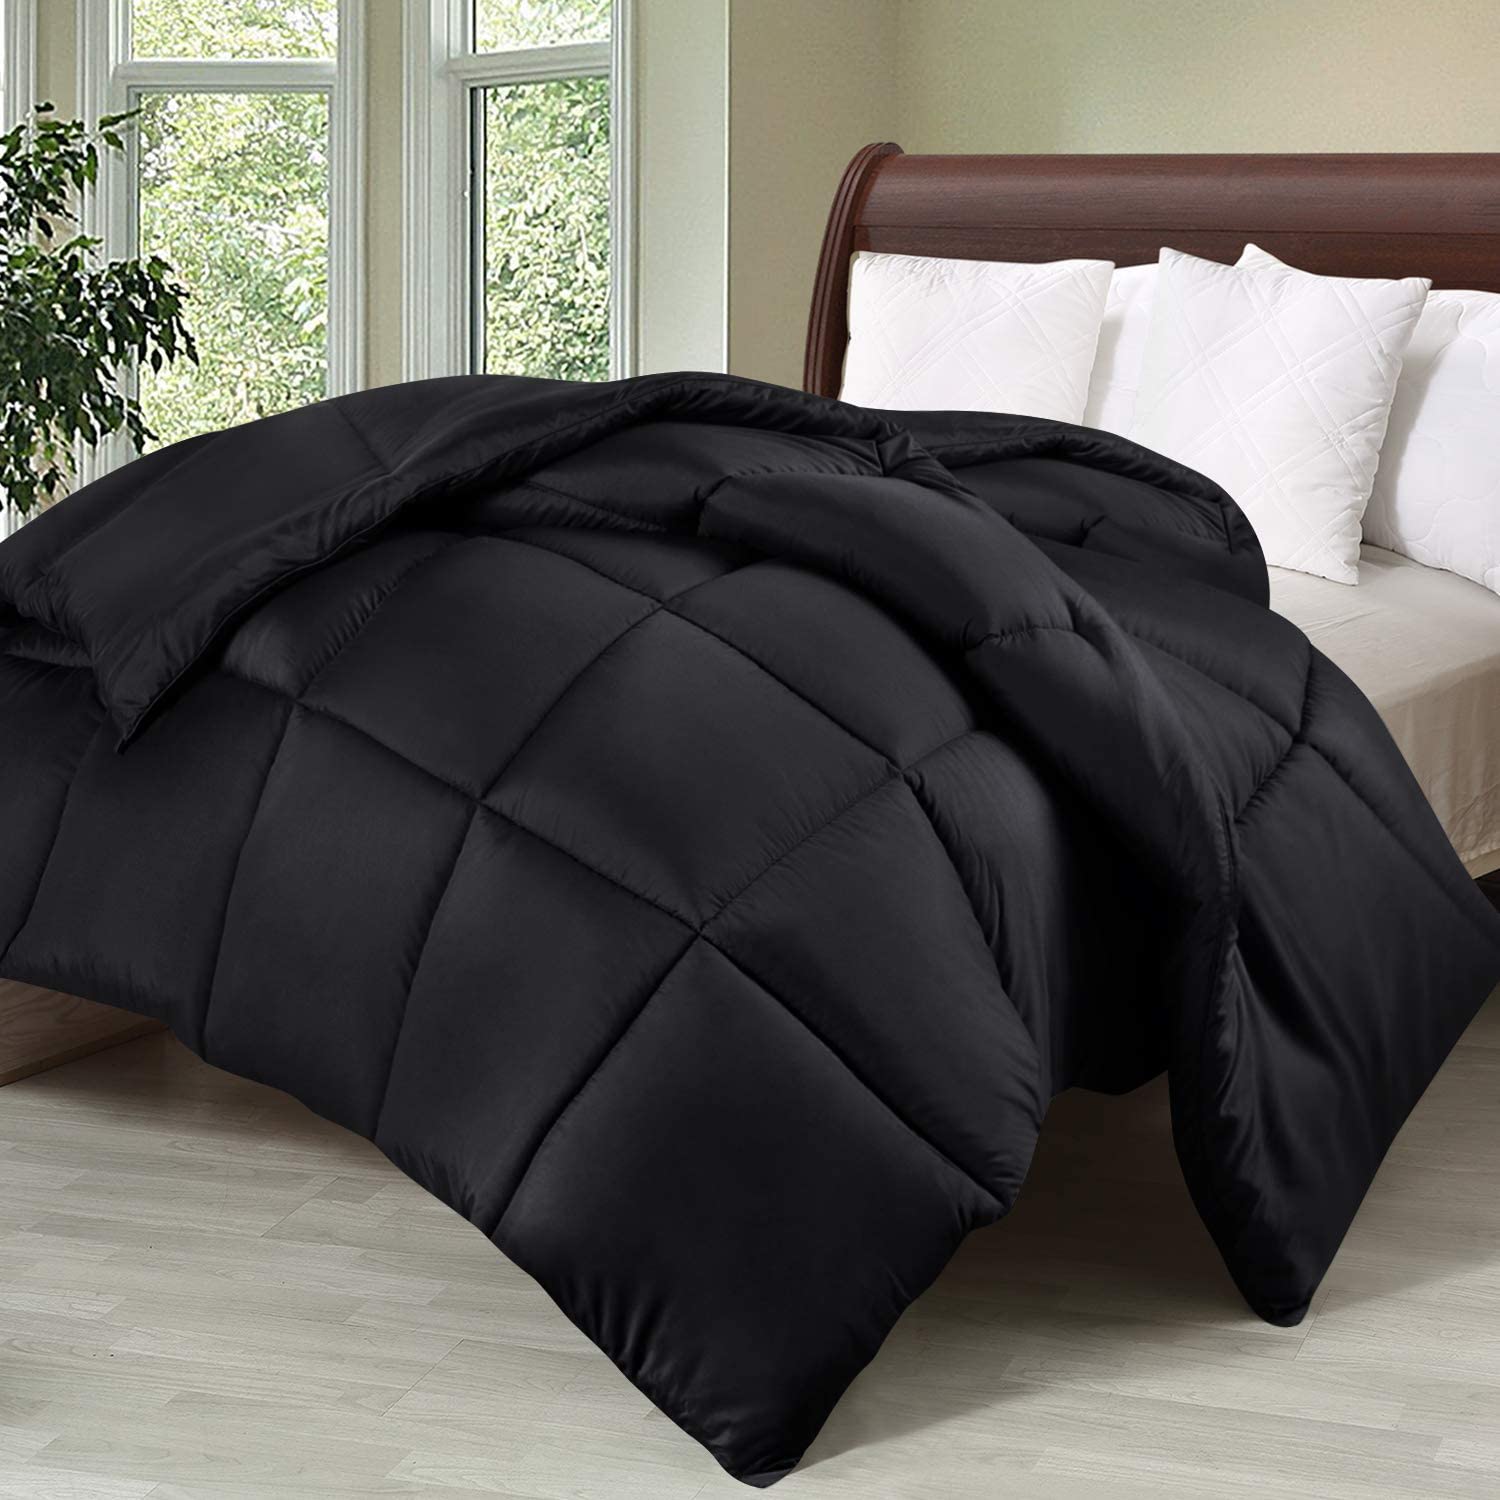 Comforter Duvet Insert - Quilted Comforter with Corner Tabs - Box Stitched down Alternative Comforter (Queen, Black)